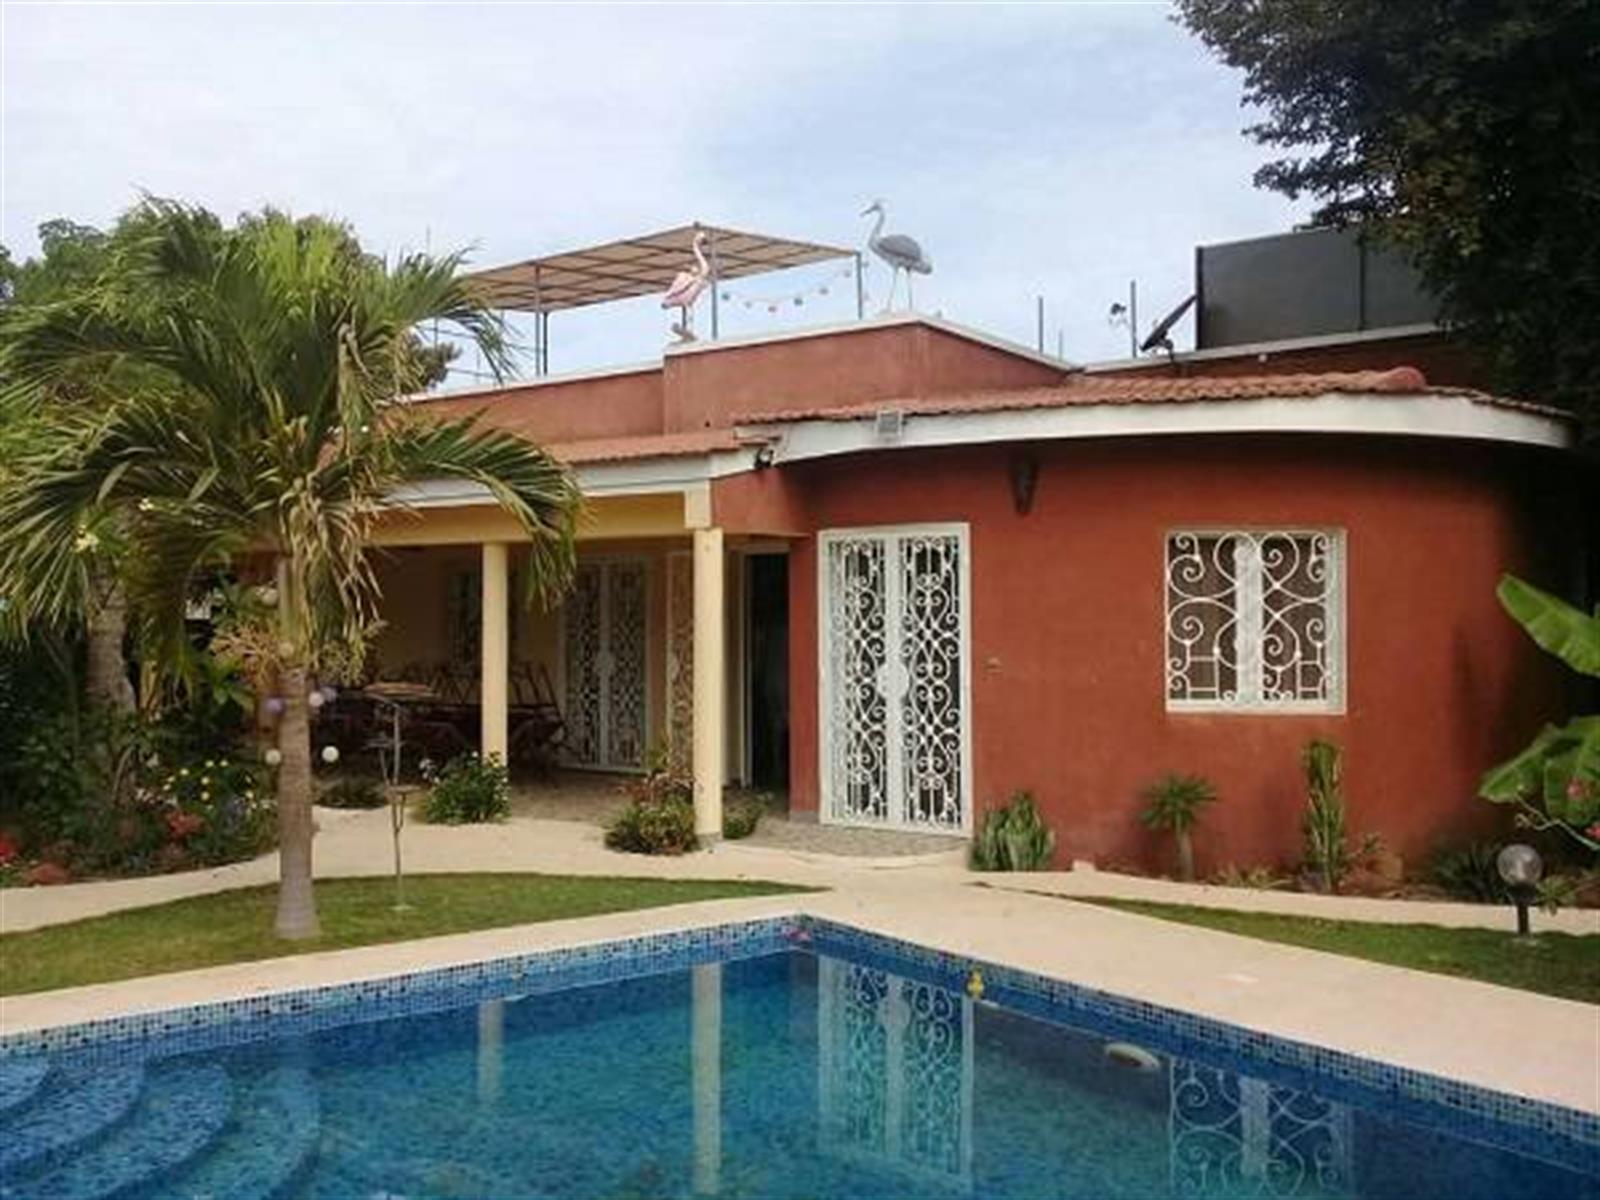 Villa avec bungalow ideal Chambres d Hotes Quartier calme  300 m de la Mer